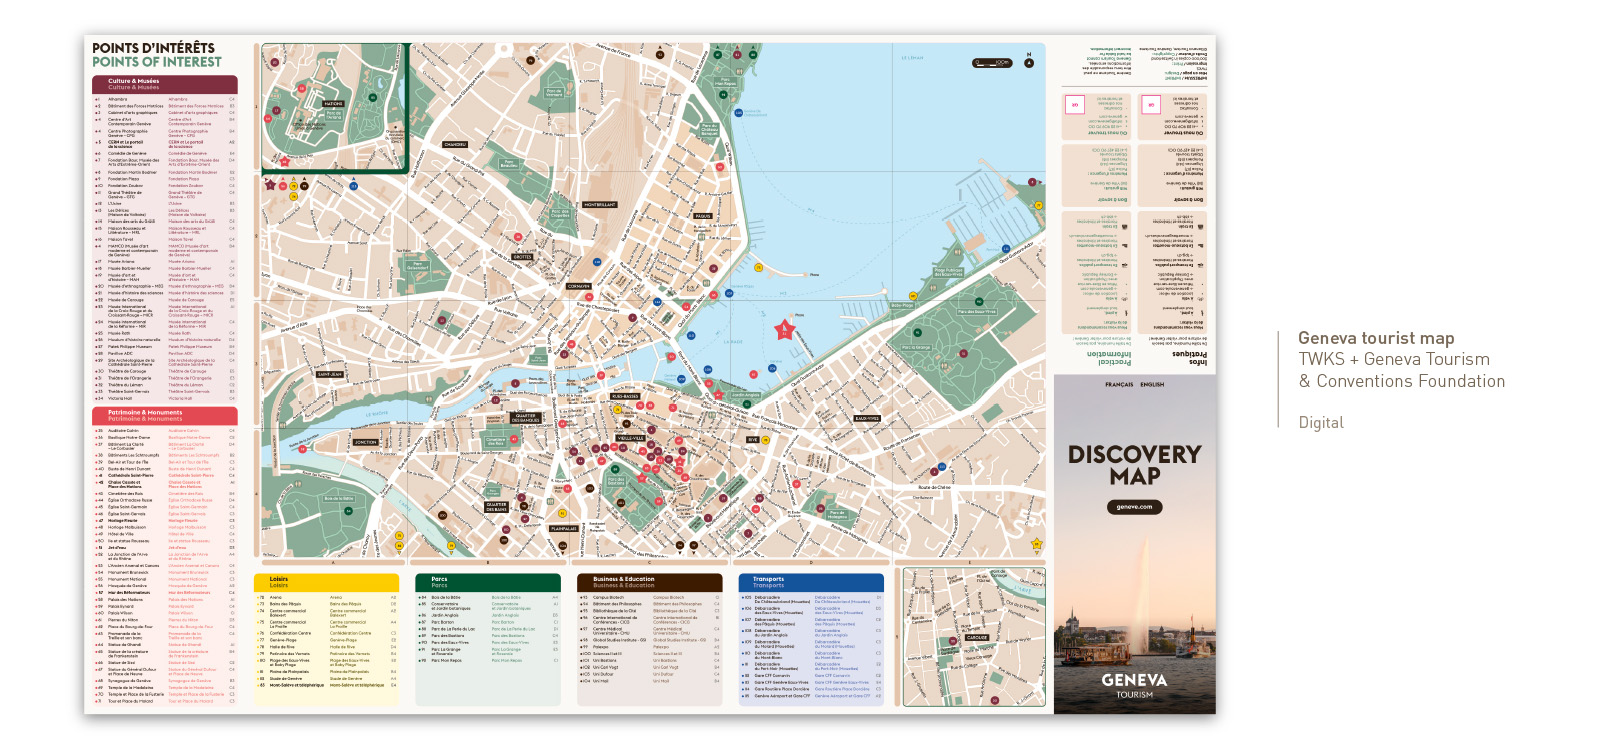 Geneva Tourist Map by Lionel Portier